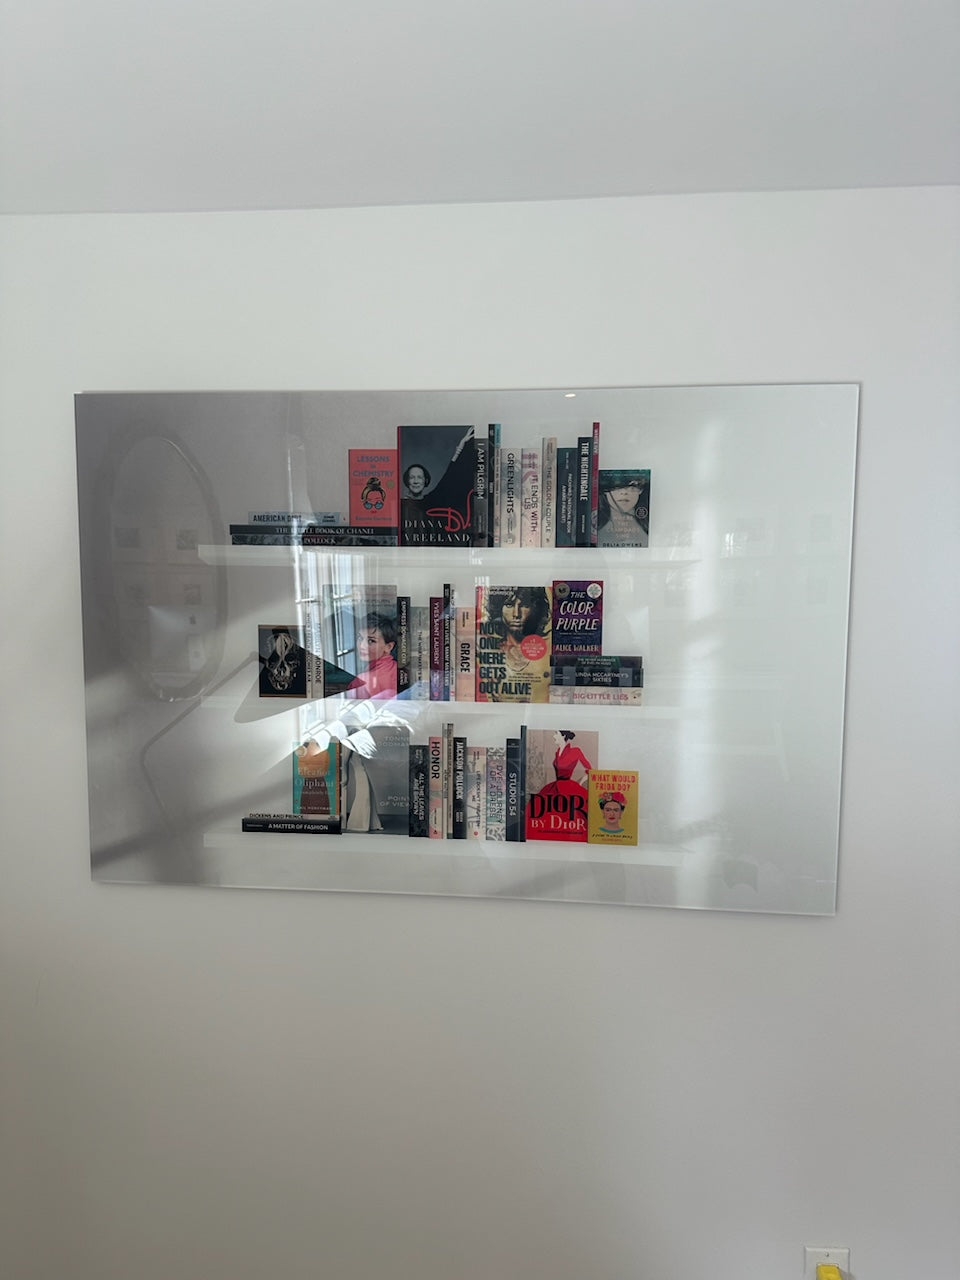 "Morning light" Shelf Portrait bookshelf wall art decor